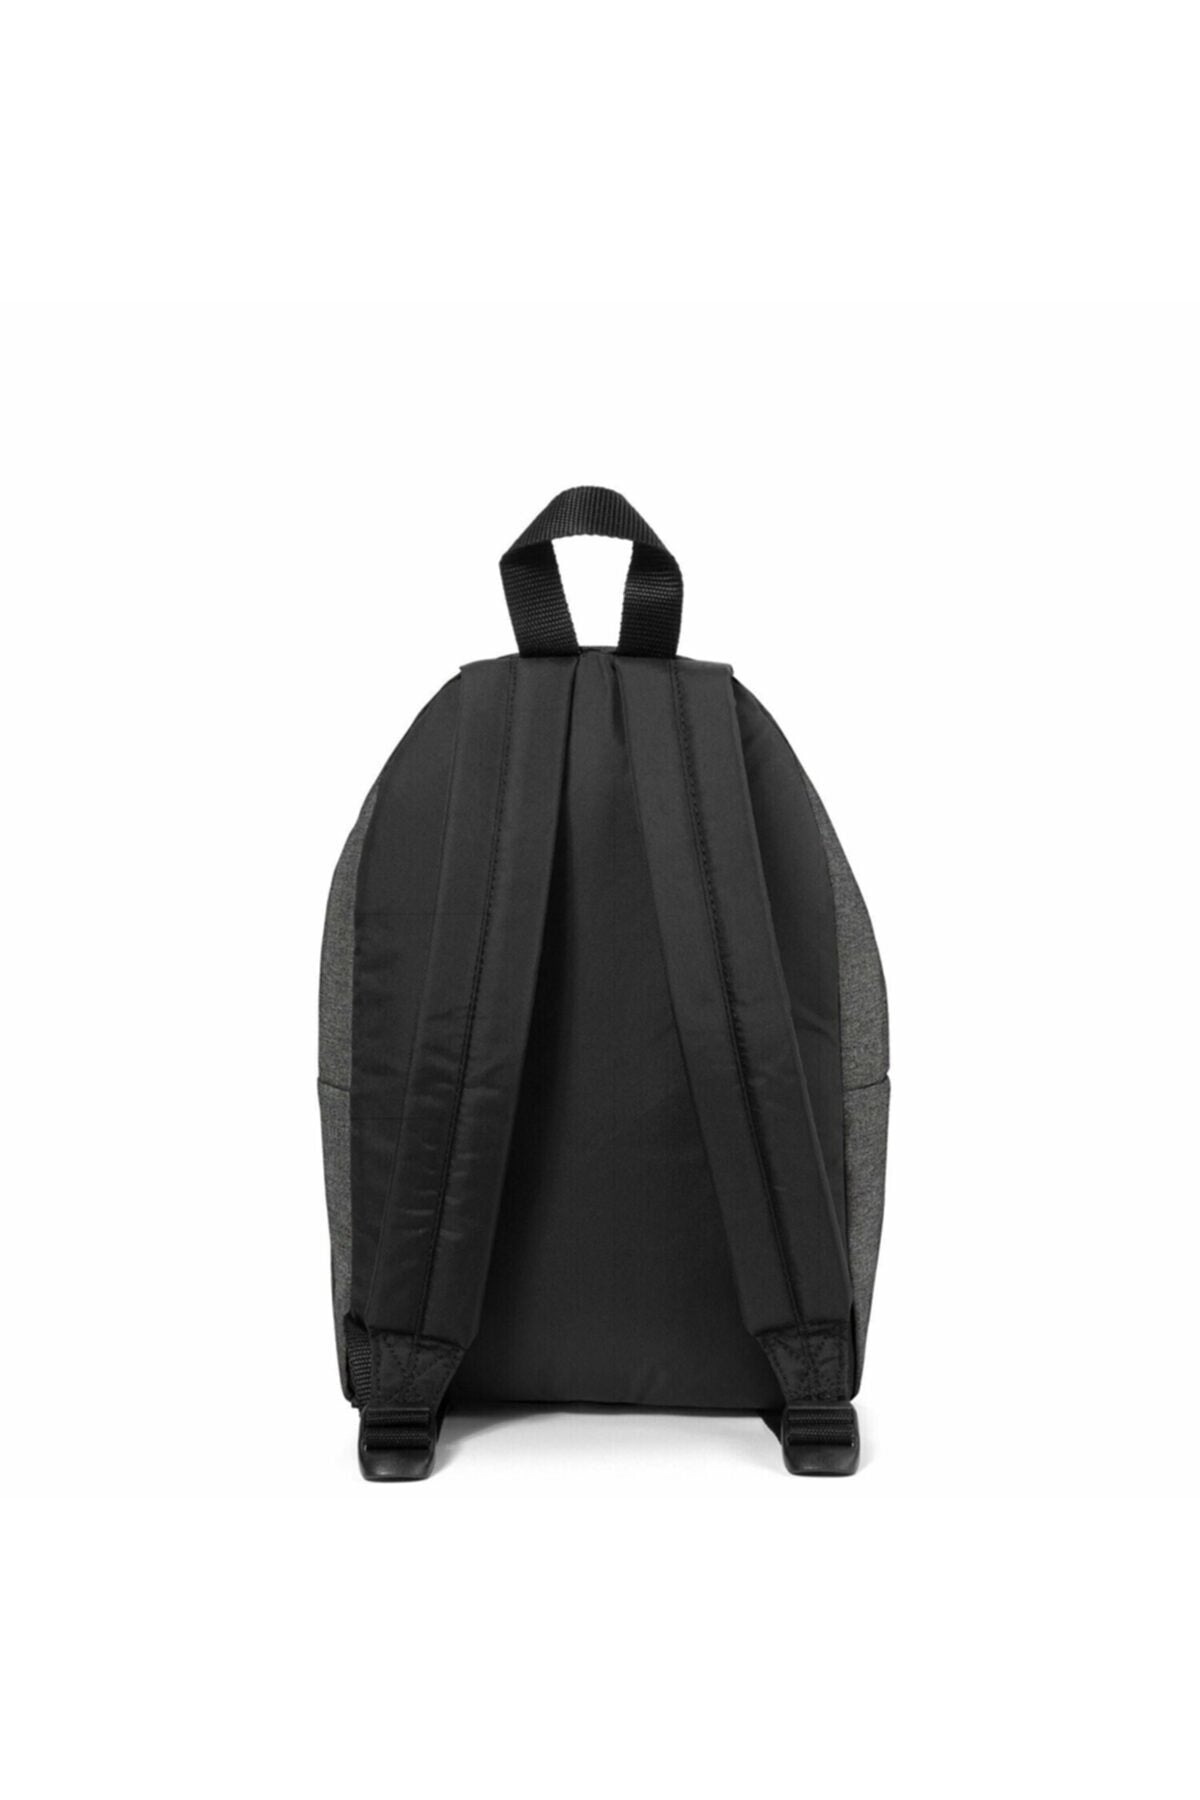 Backpack Orbit Black Denim